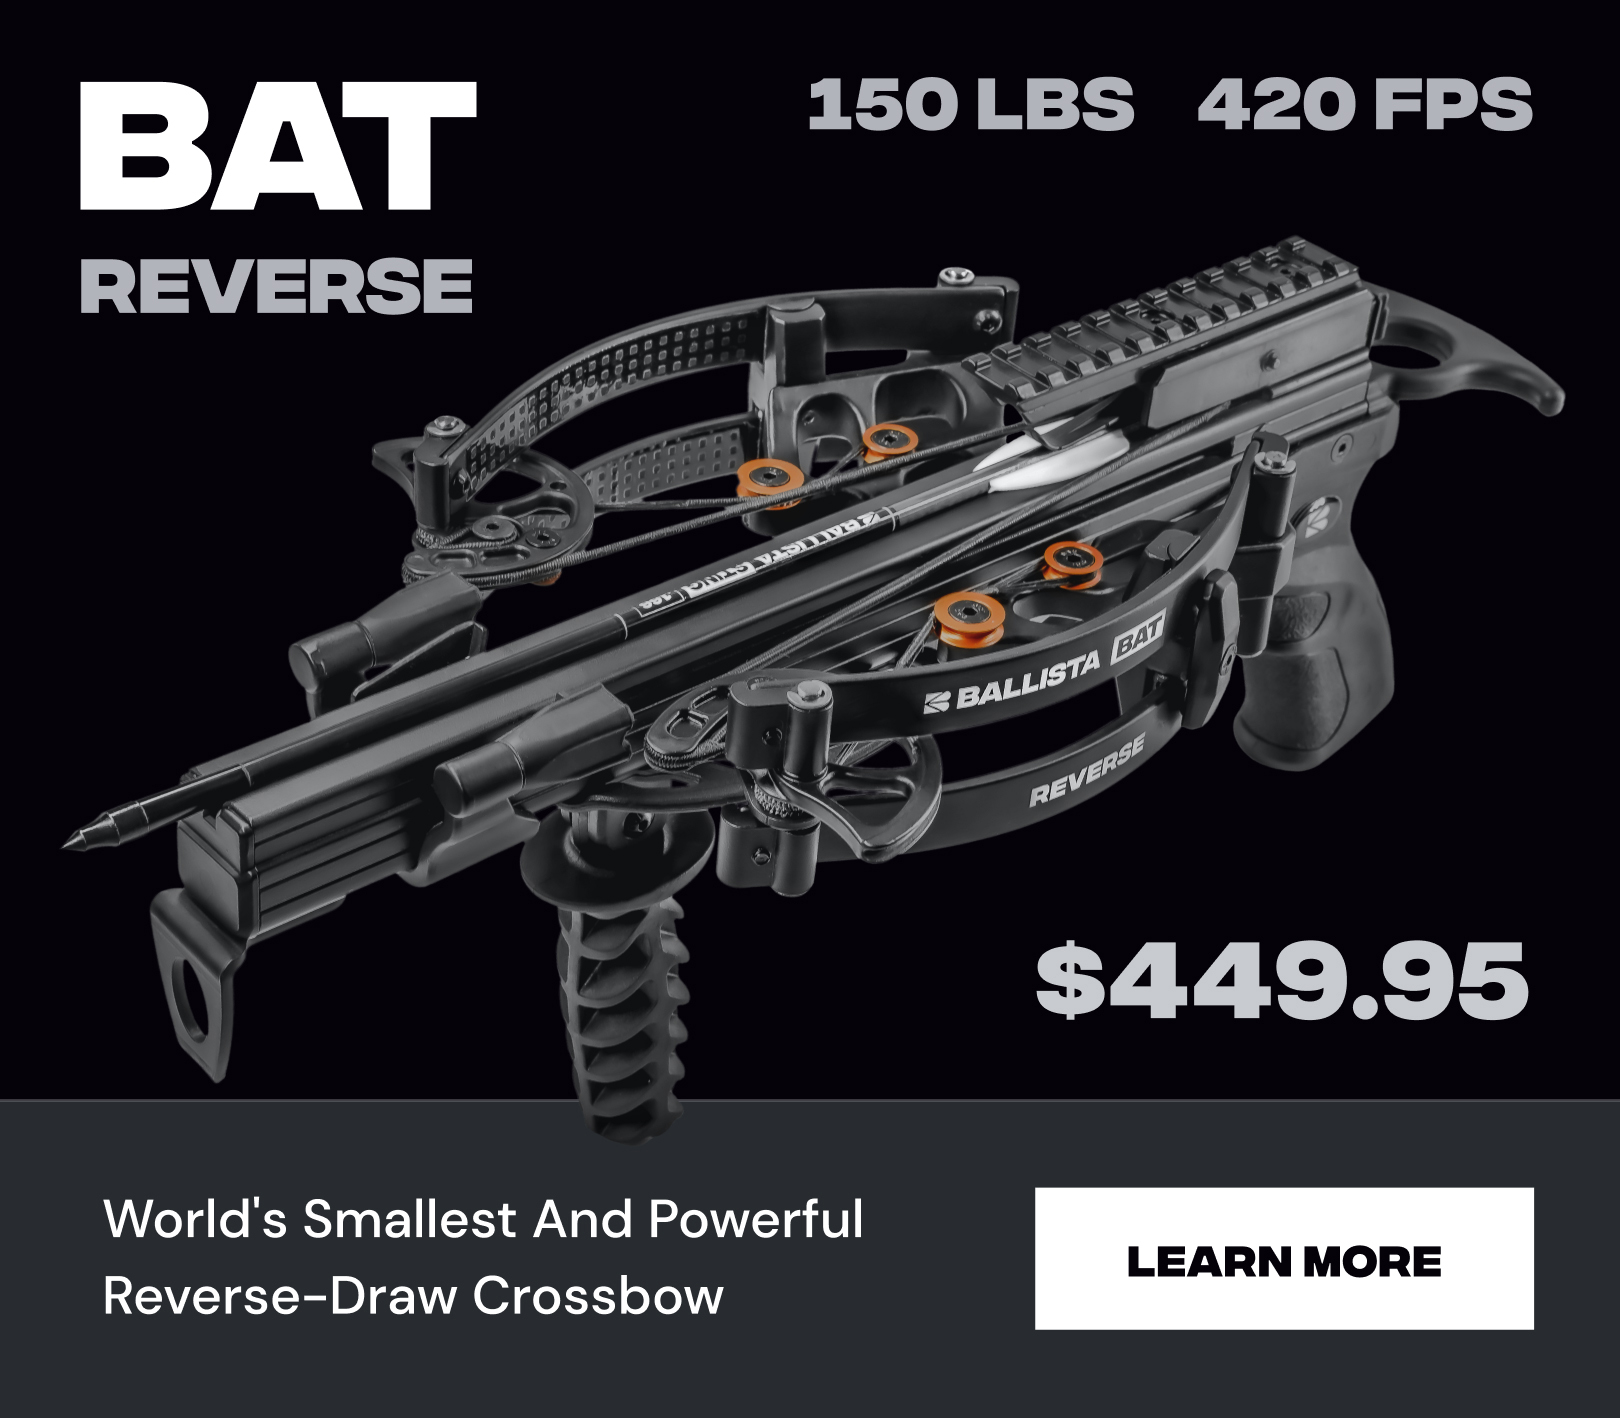 Bat Reverse Pistol Crossbow